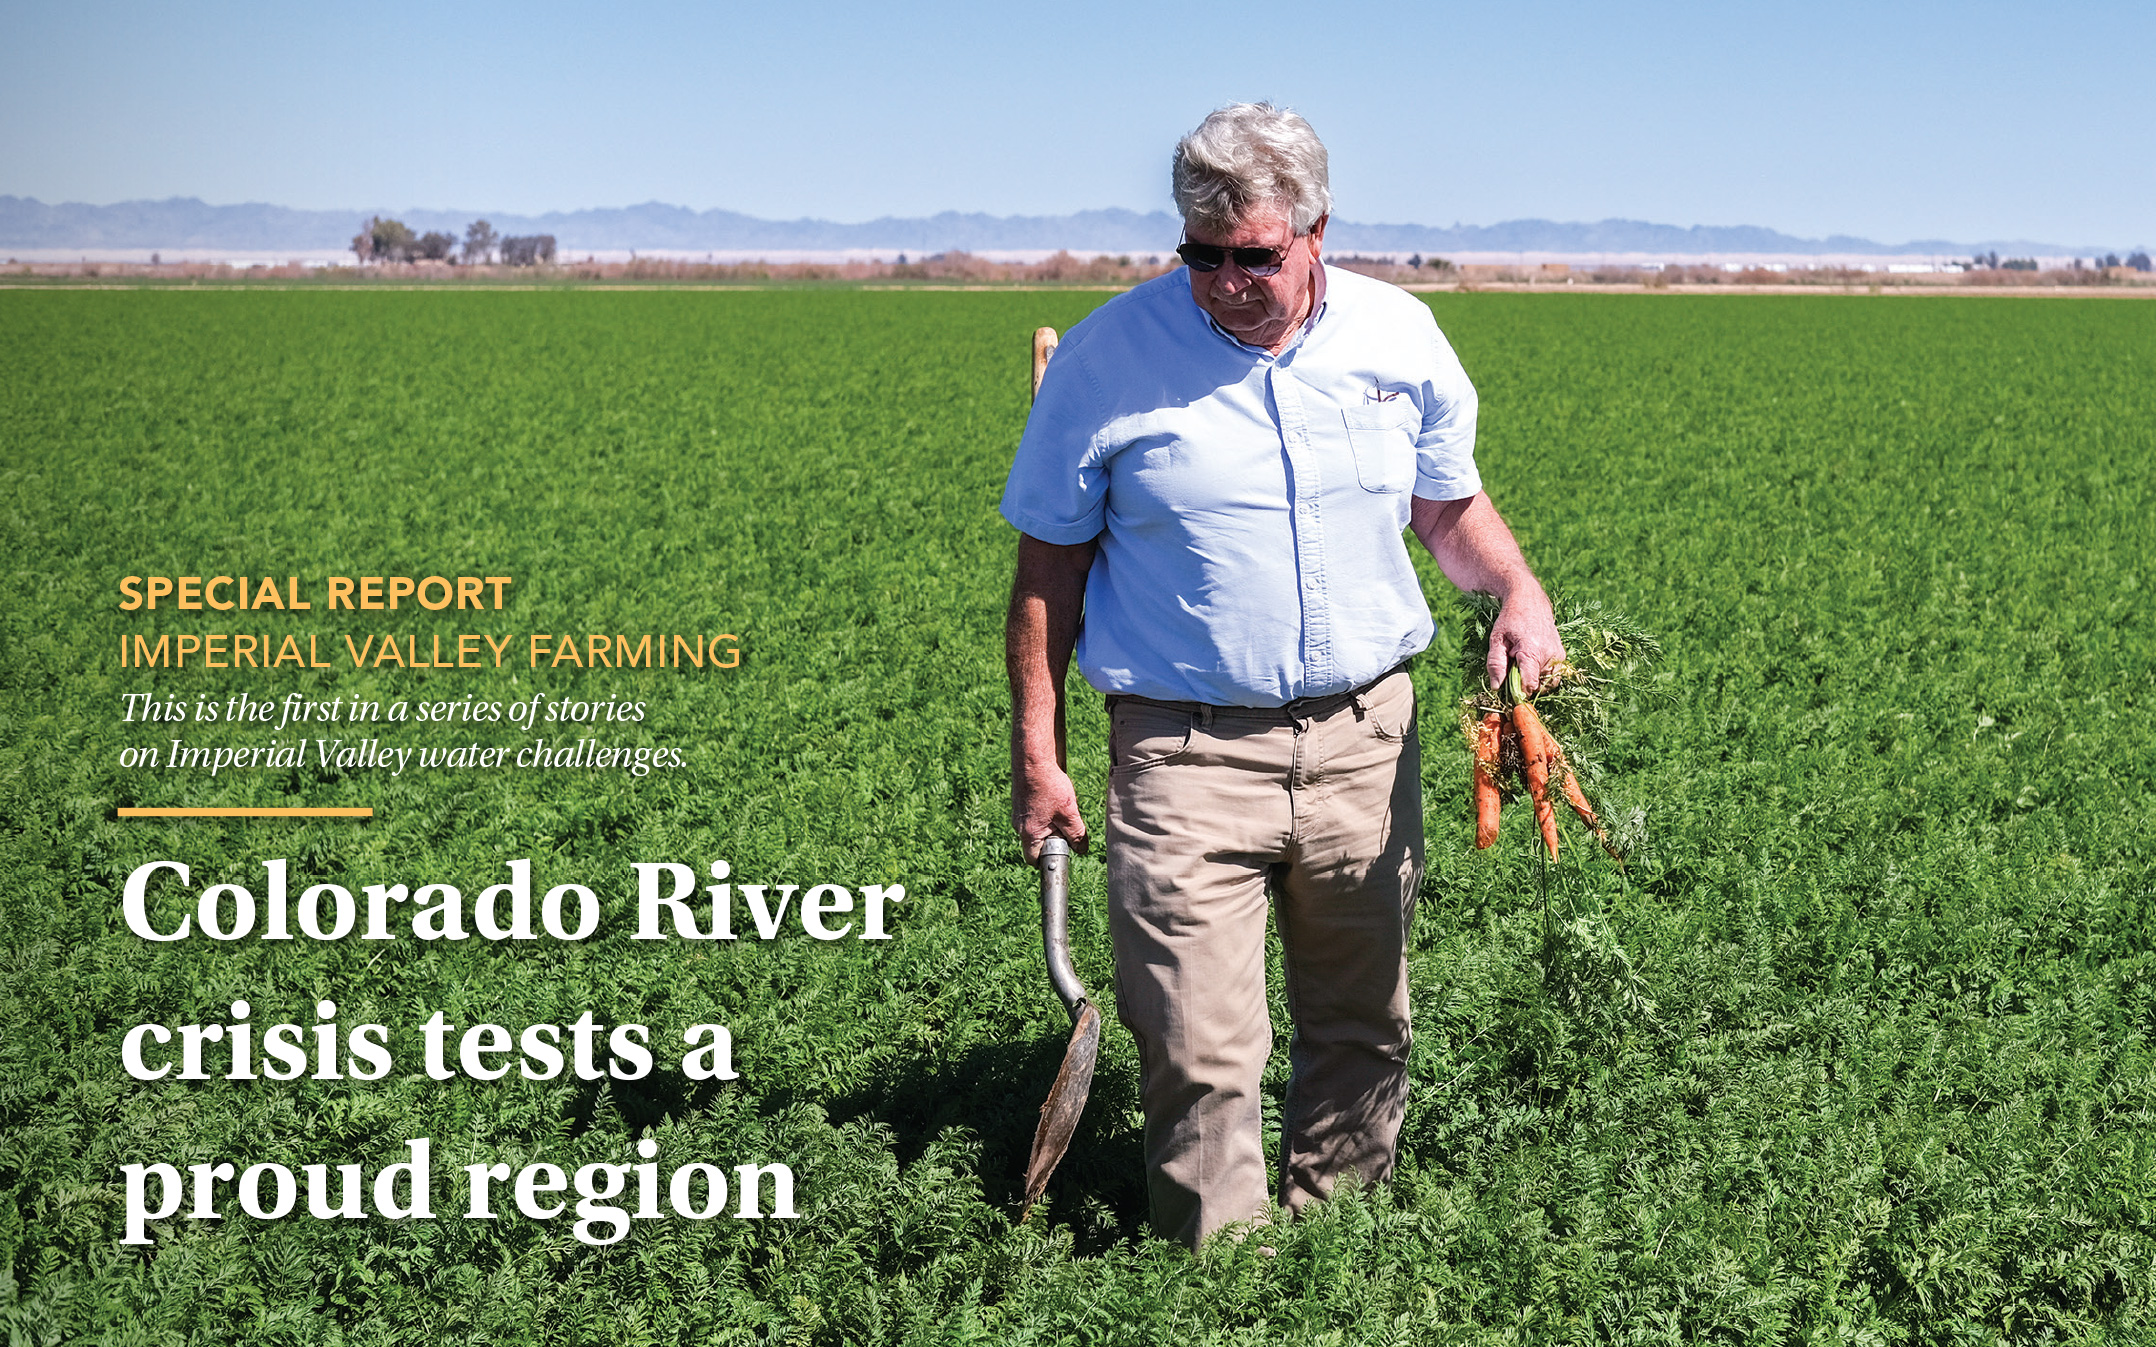 Colorado River crisis tests a proud region